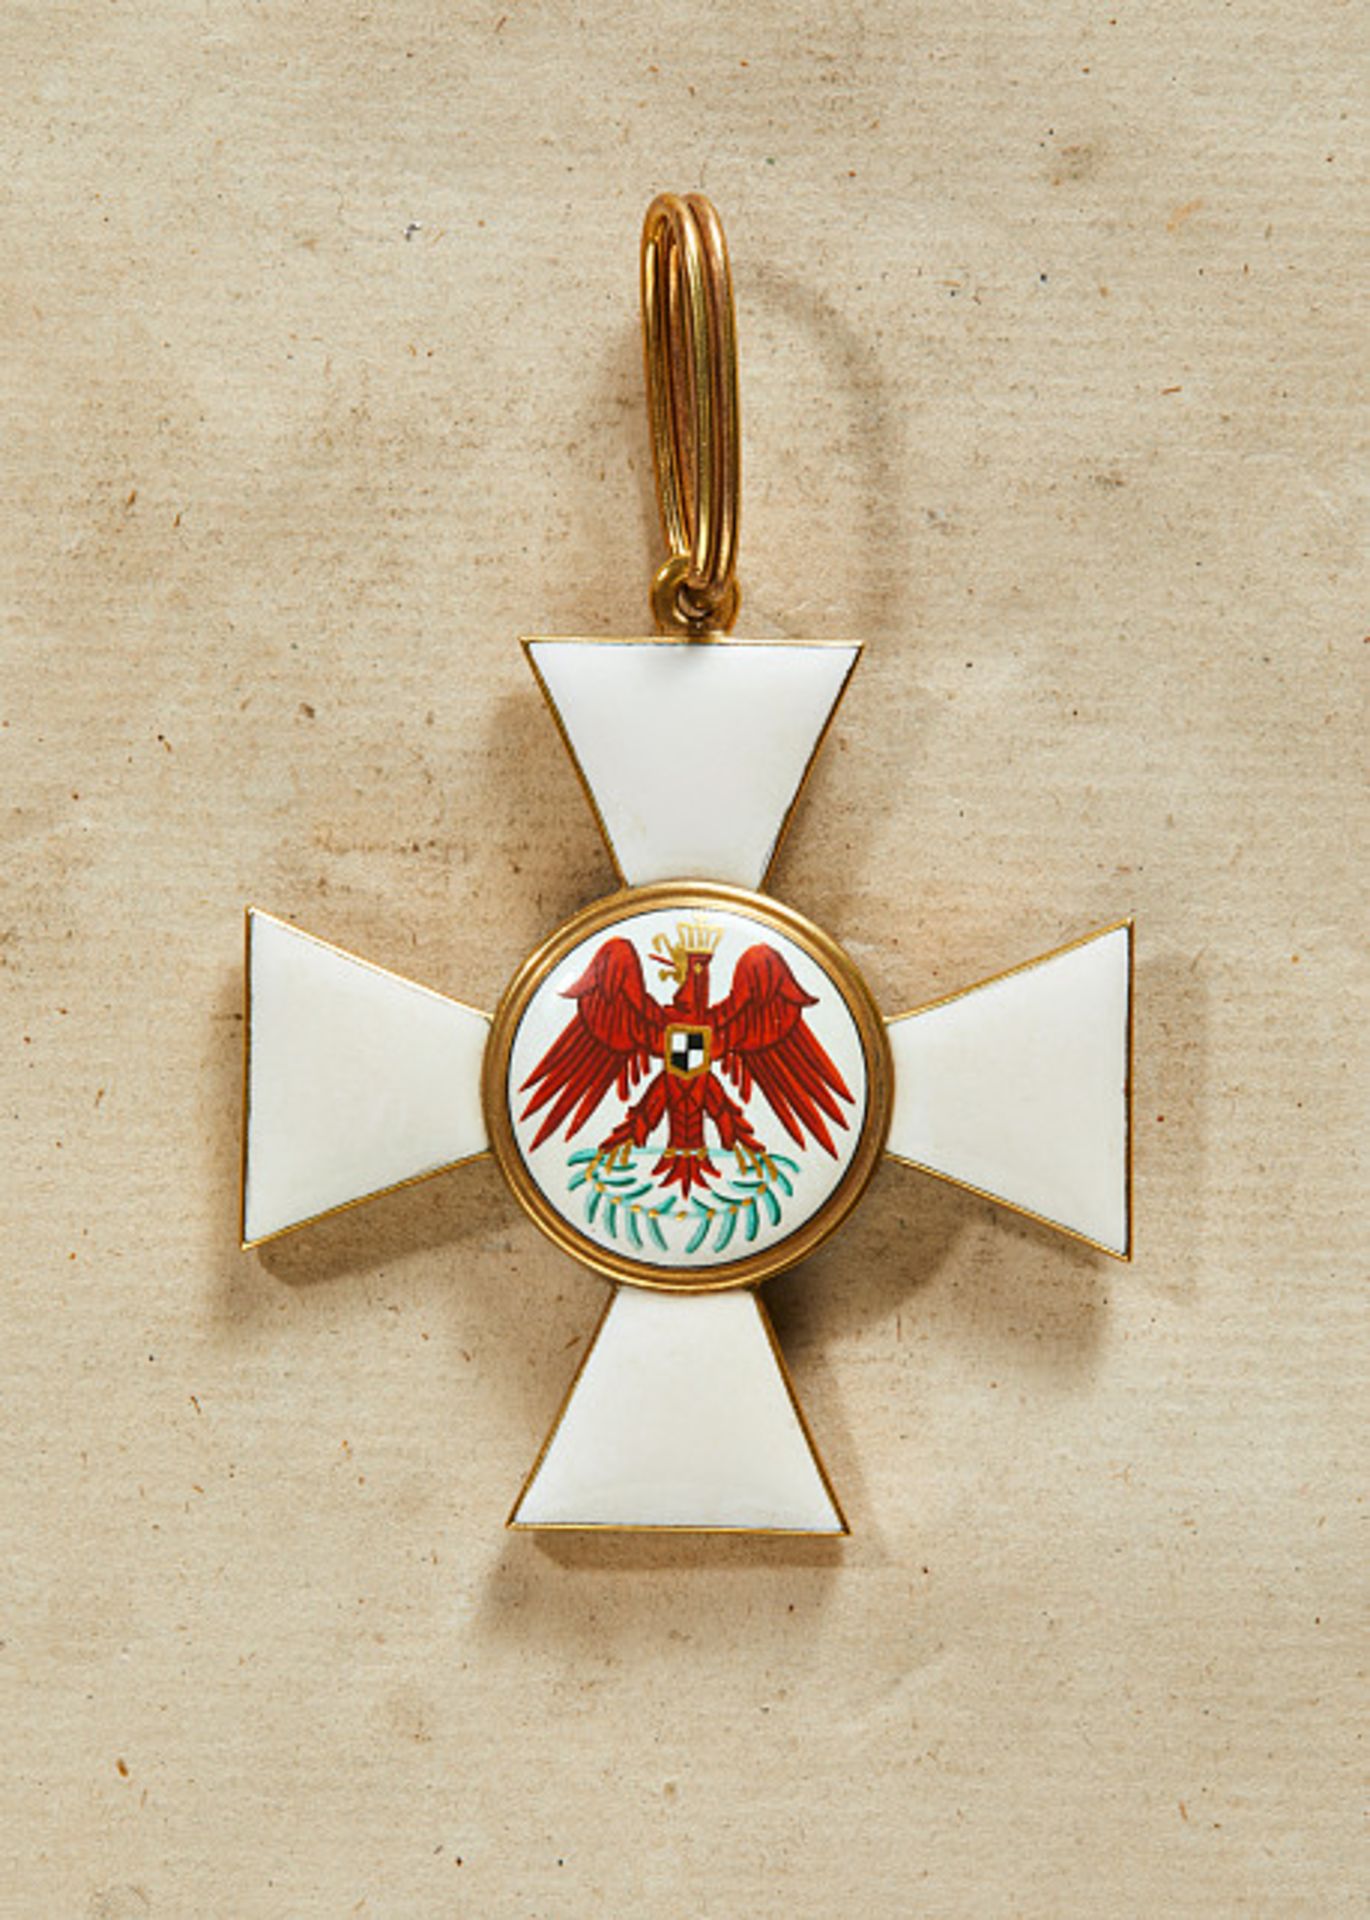 KÖNIGREICH PREUSSEN - ROTER-ADLER-ORDEN : Kreuz 2. Klasse. Gold und Emaille, an späterem Halsband.